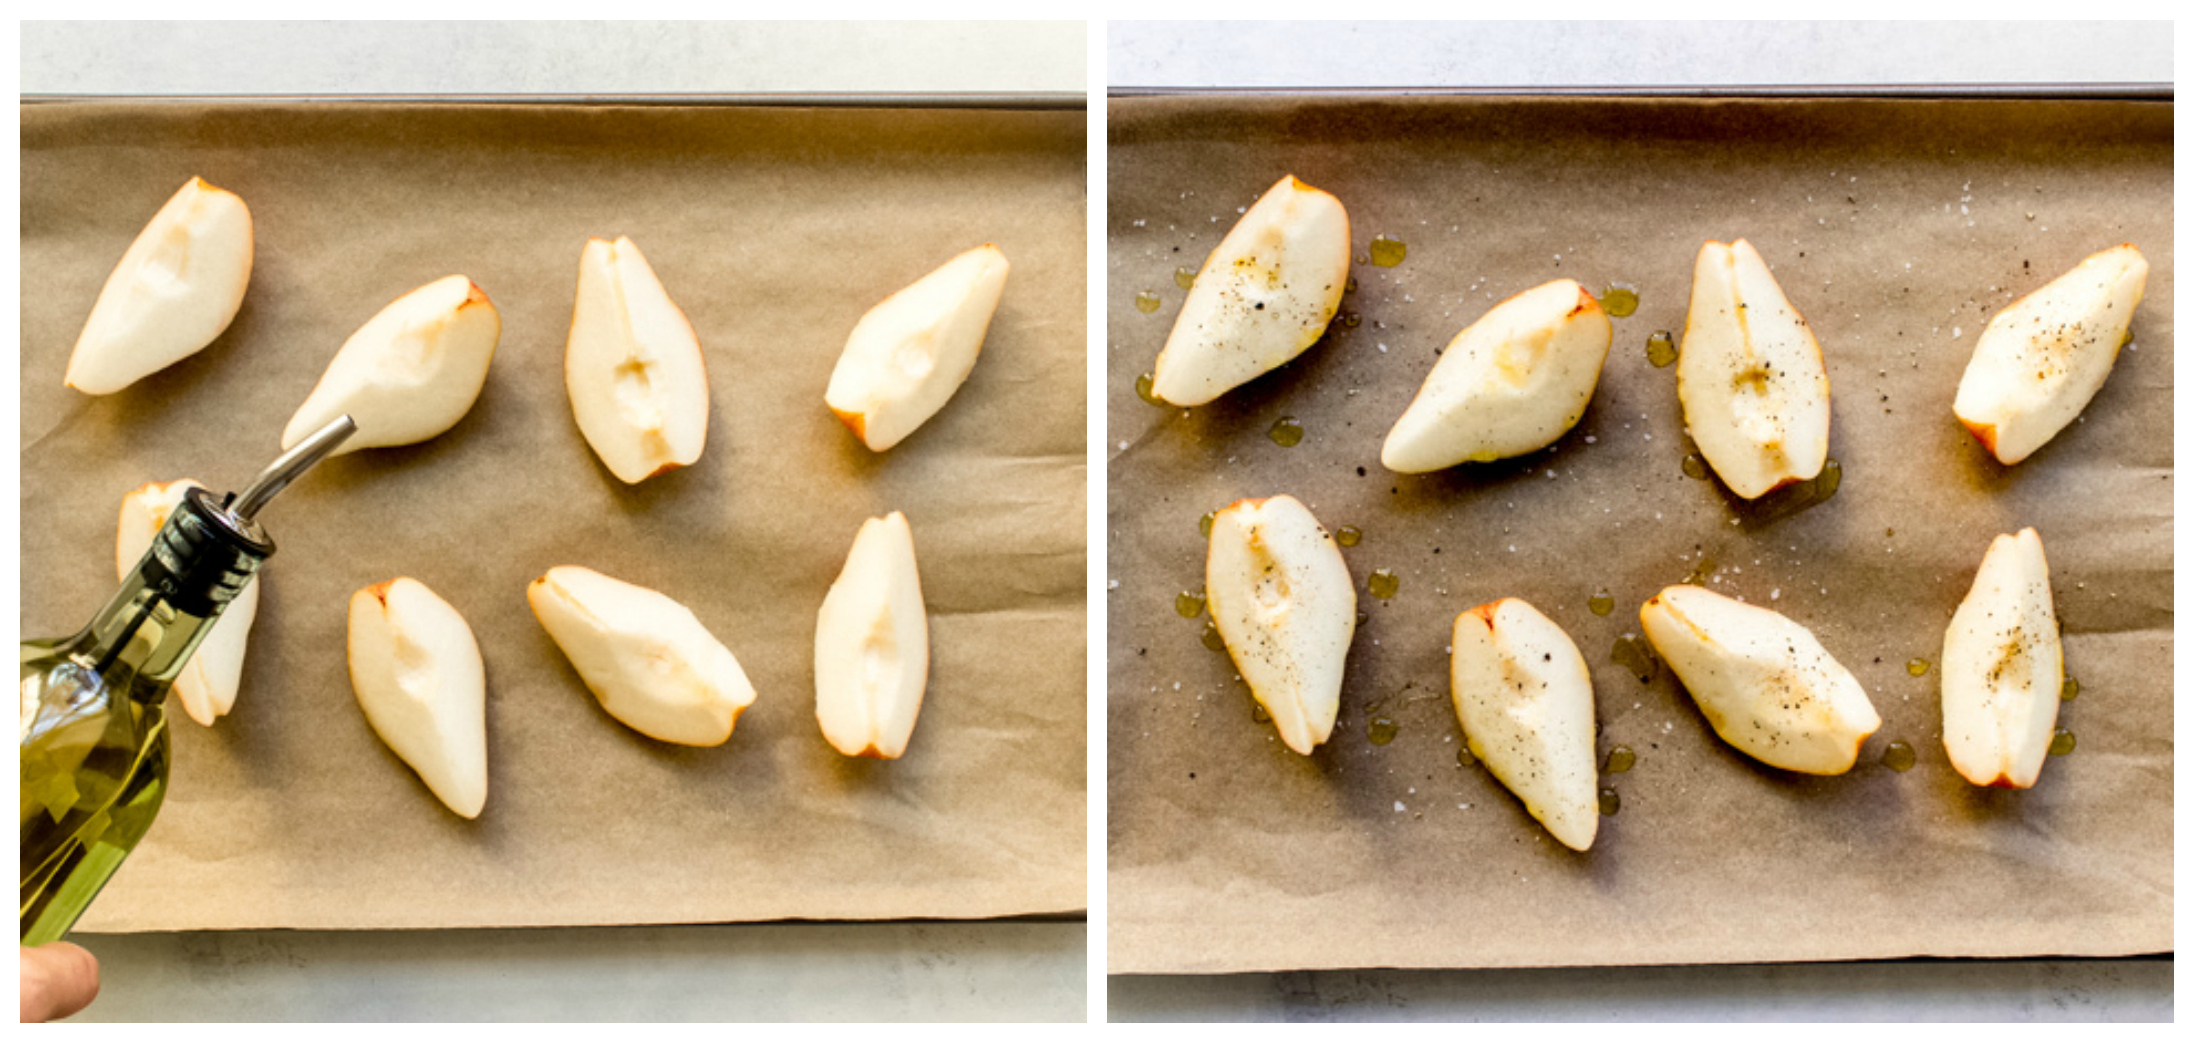 roasted pears on baking sheet